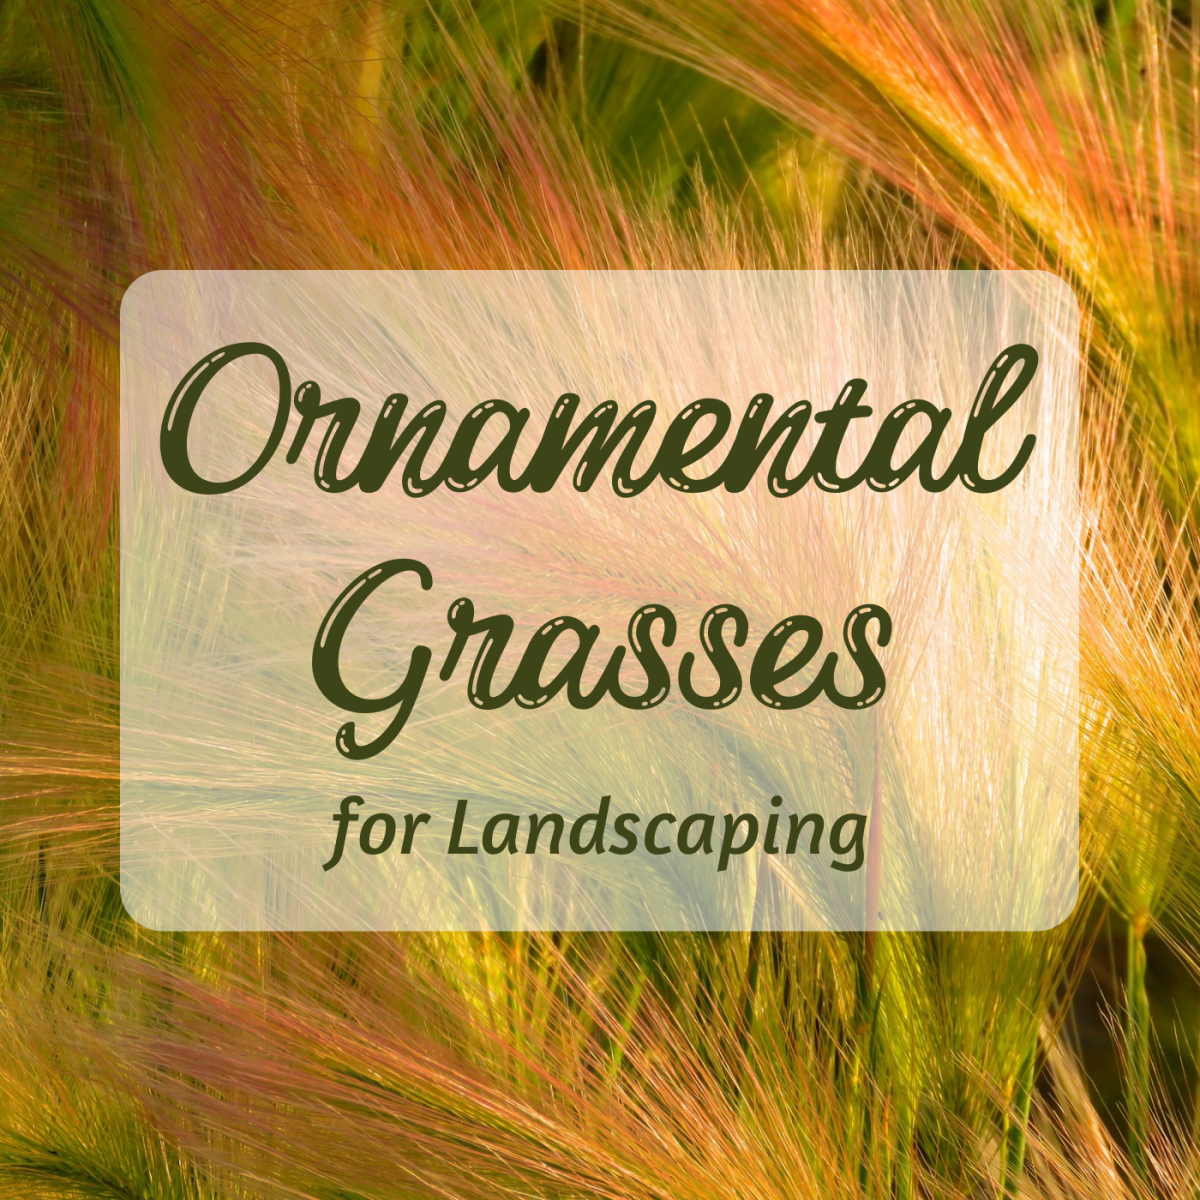 Ornamental Grasses: A Unique Landscaping Choice